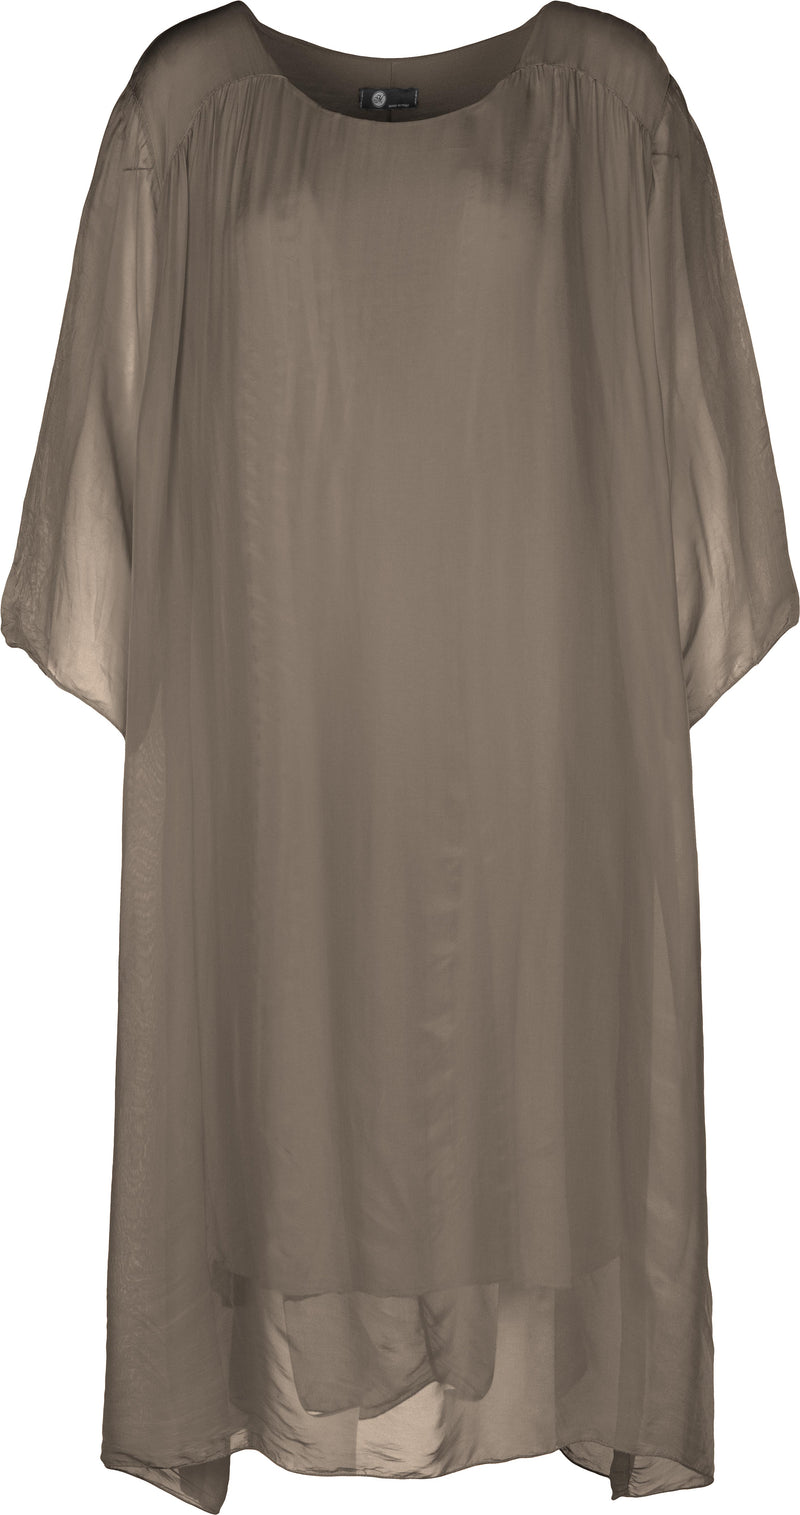 Silky 3/4 Sleeve Lined Dress